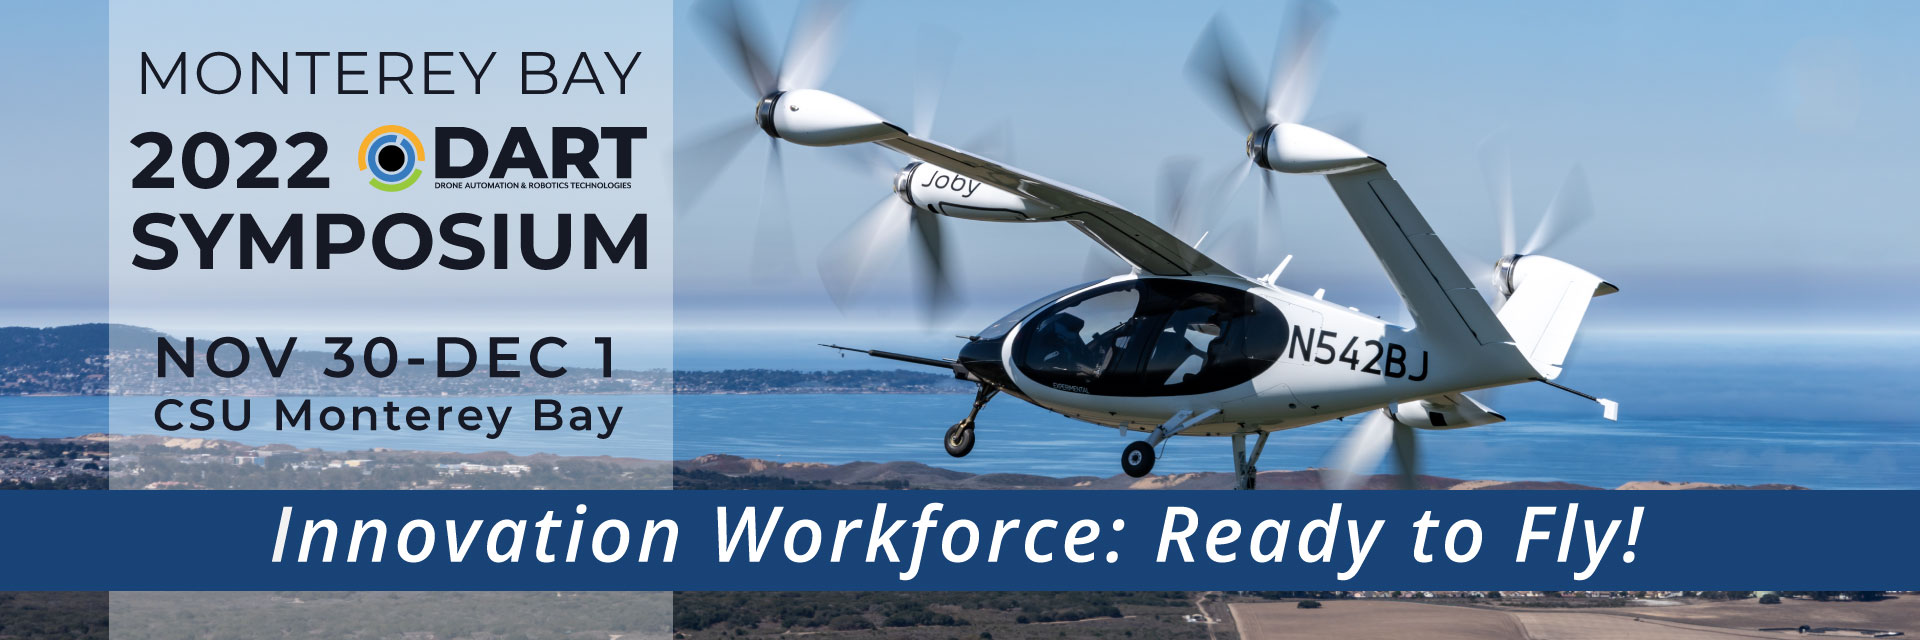 2022 Monterey Bay DART Symposium November 30-December 1 - Innovation Workforce: Ready to Fly